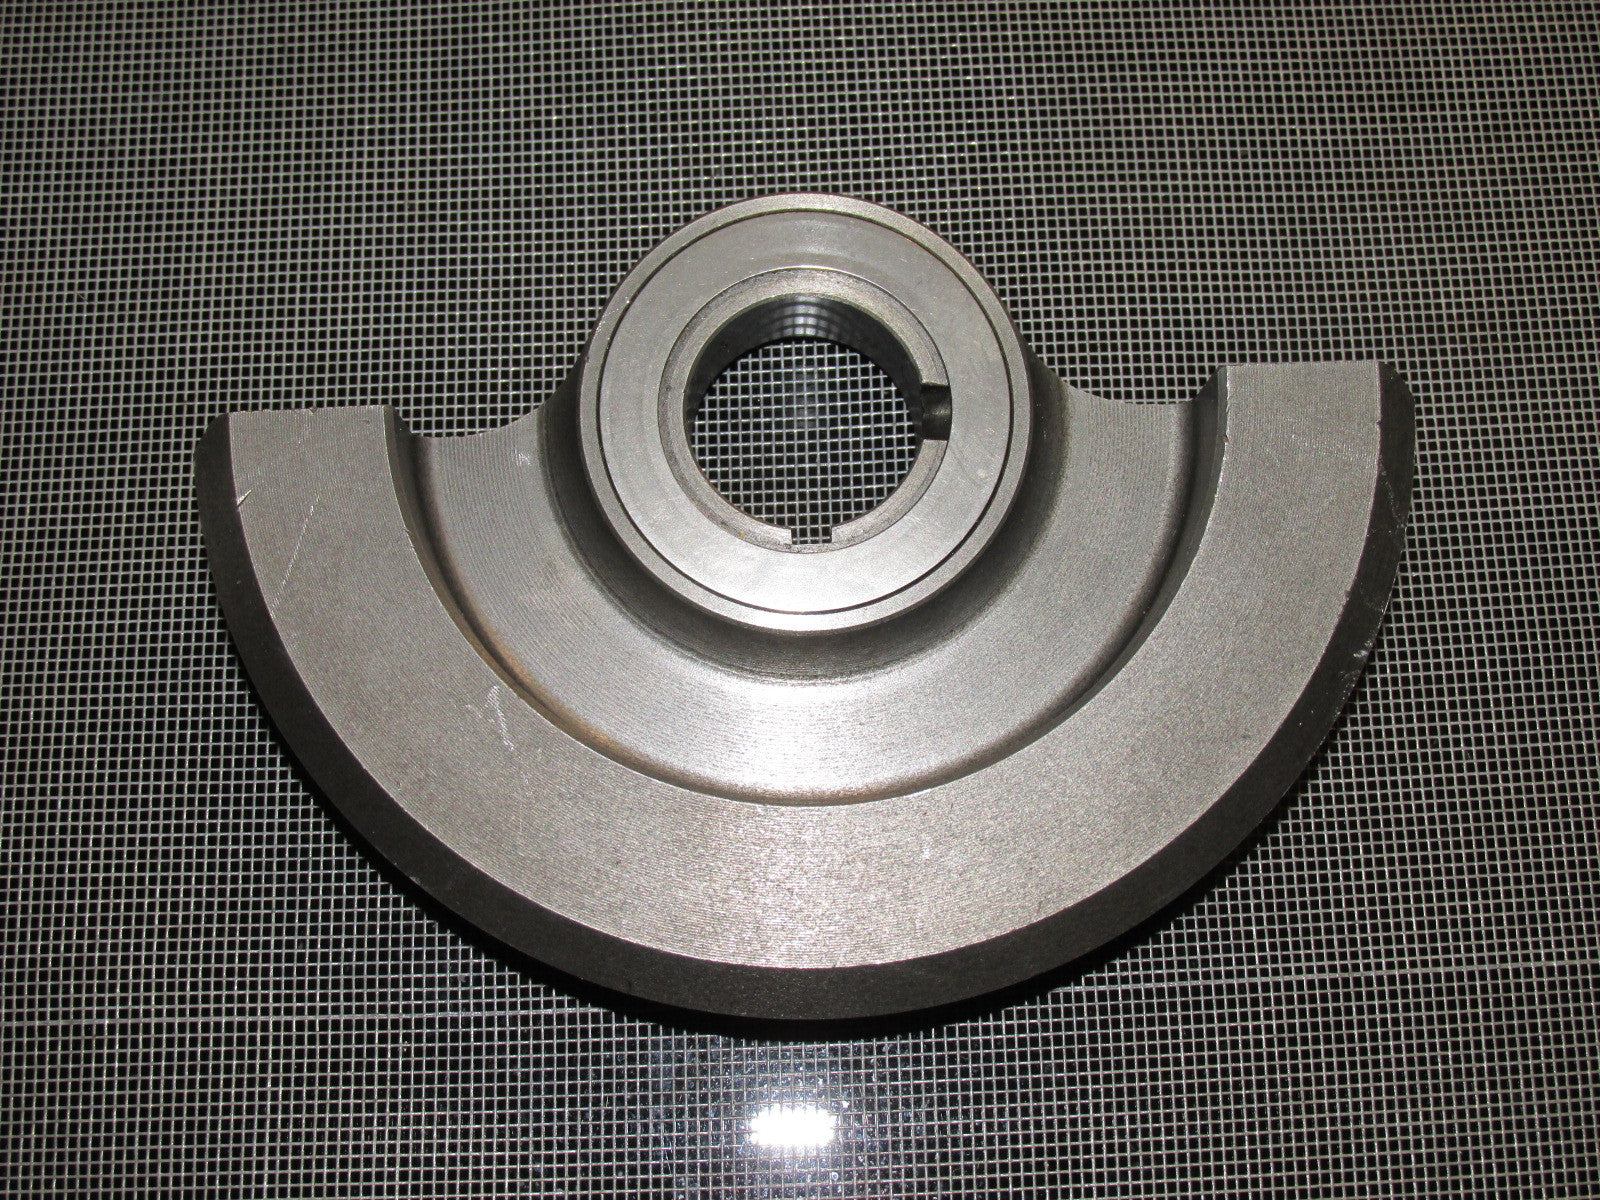 86 87 88 Mazda RX7 OEM Engine Eccentric Shaft Balance Weight